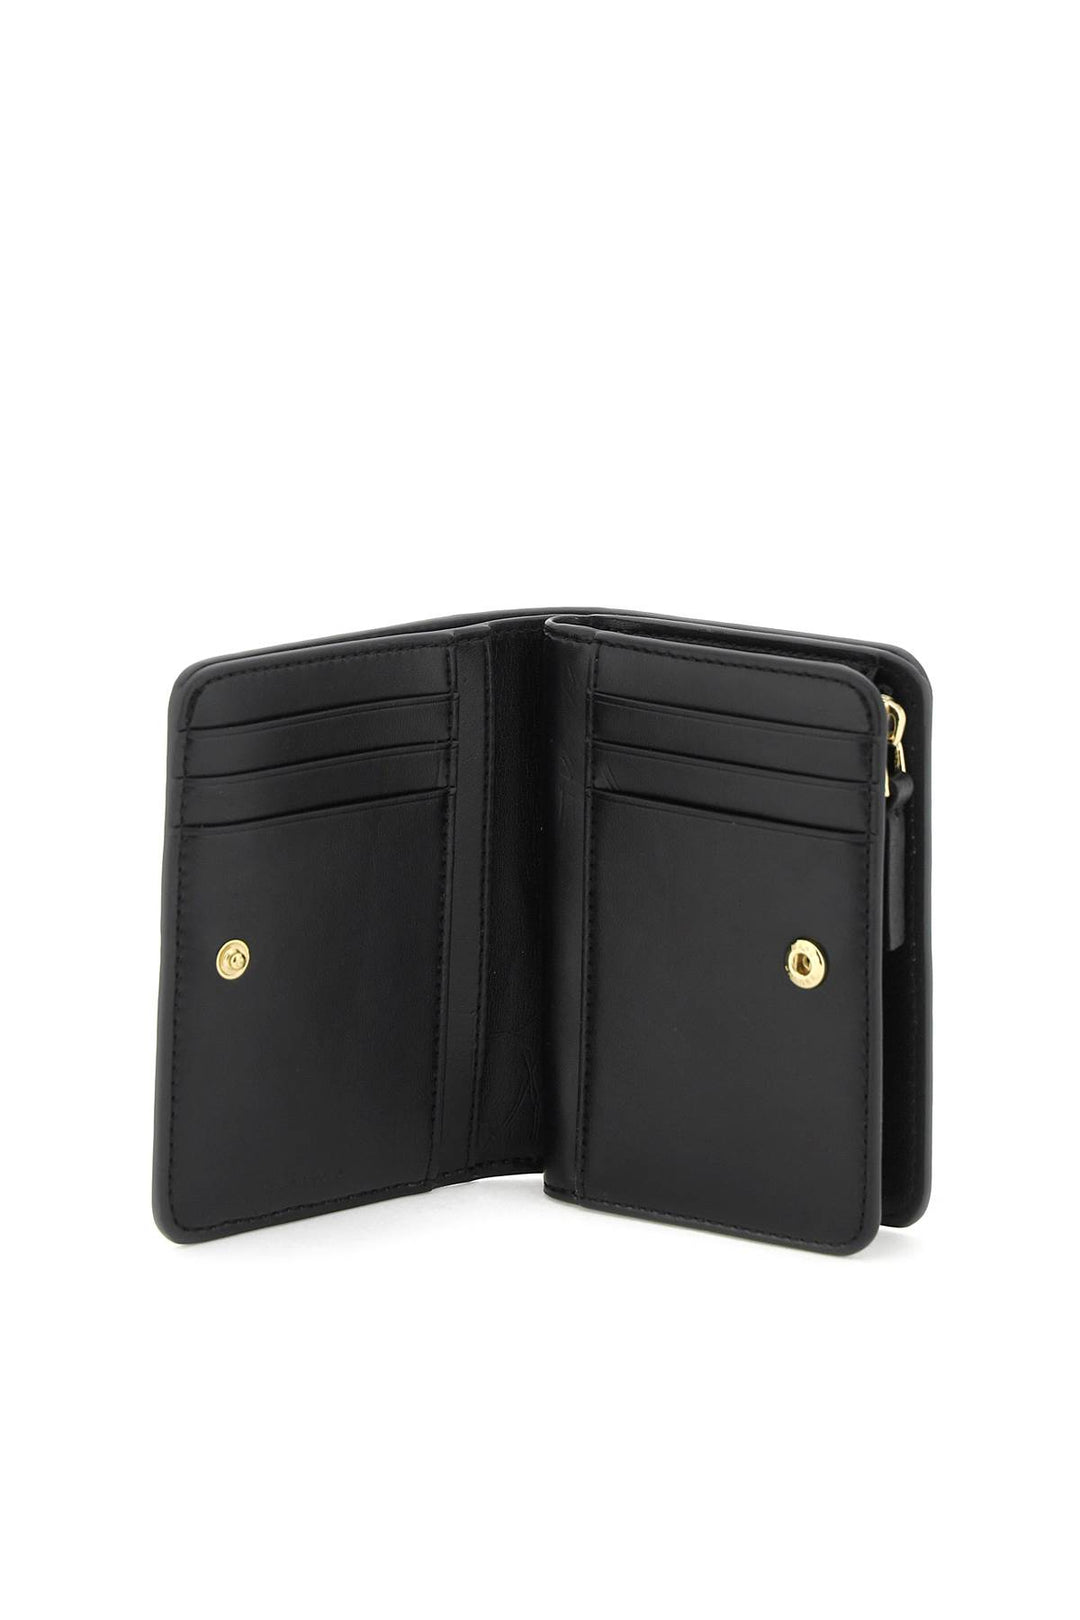 Marc Jacobs The J Marc Mini Compact Wallet   Nero